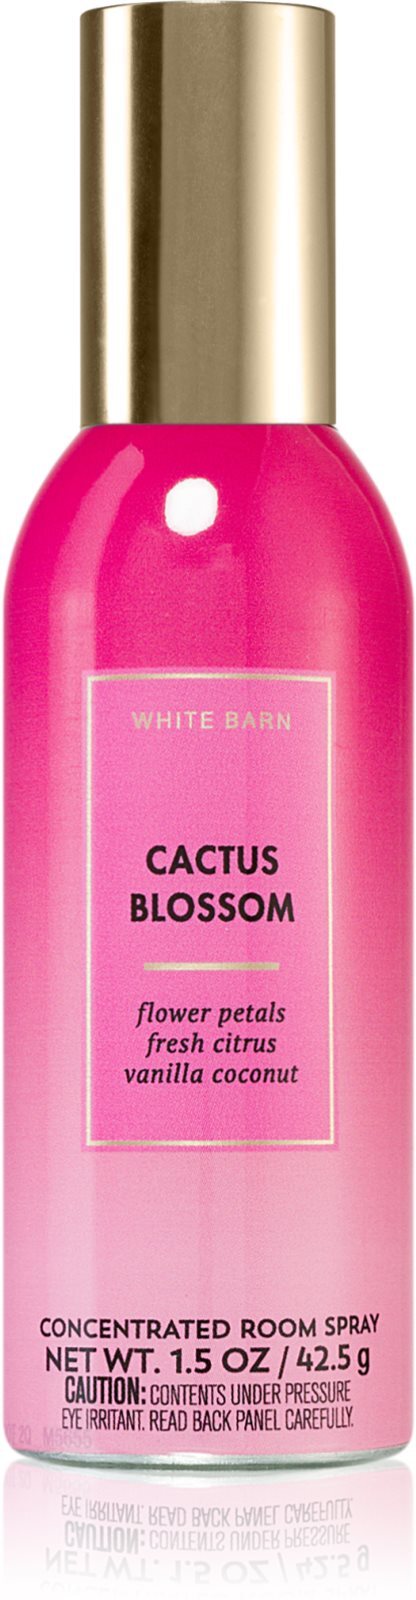 Bath & Body Works White Barn Cactus Blossom Room Spray